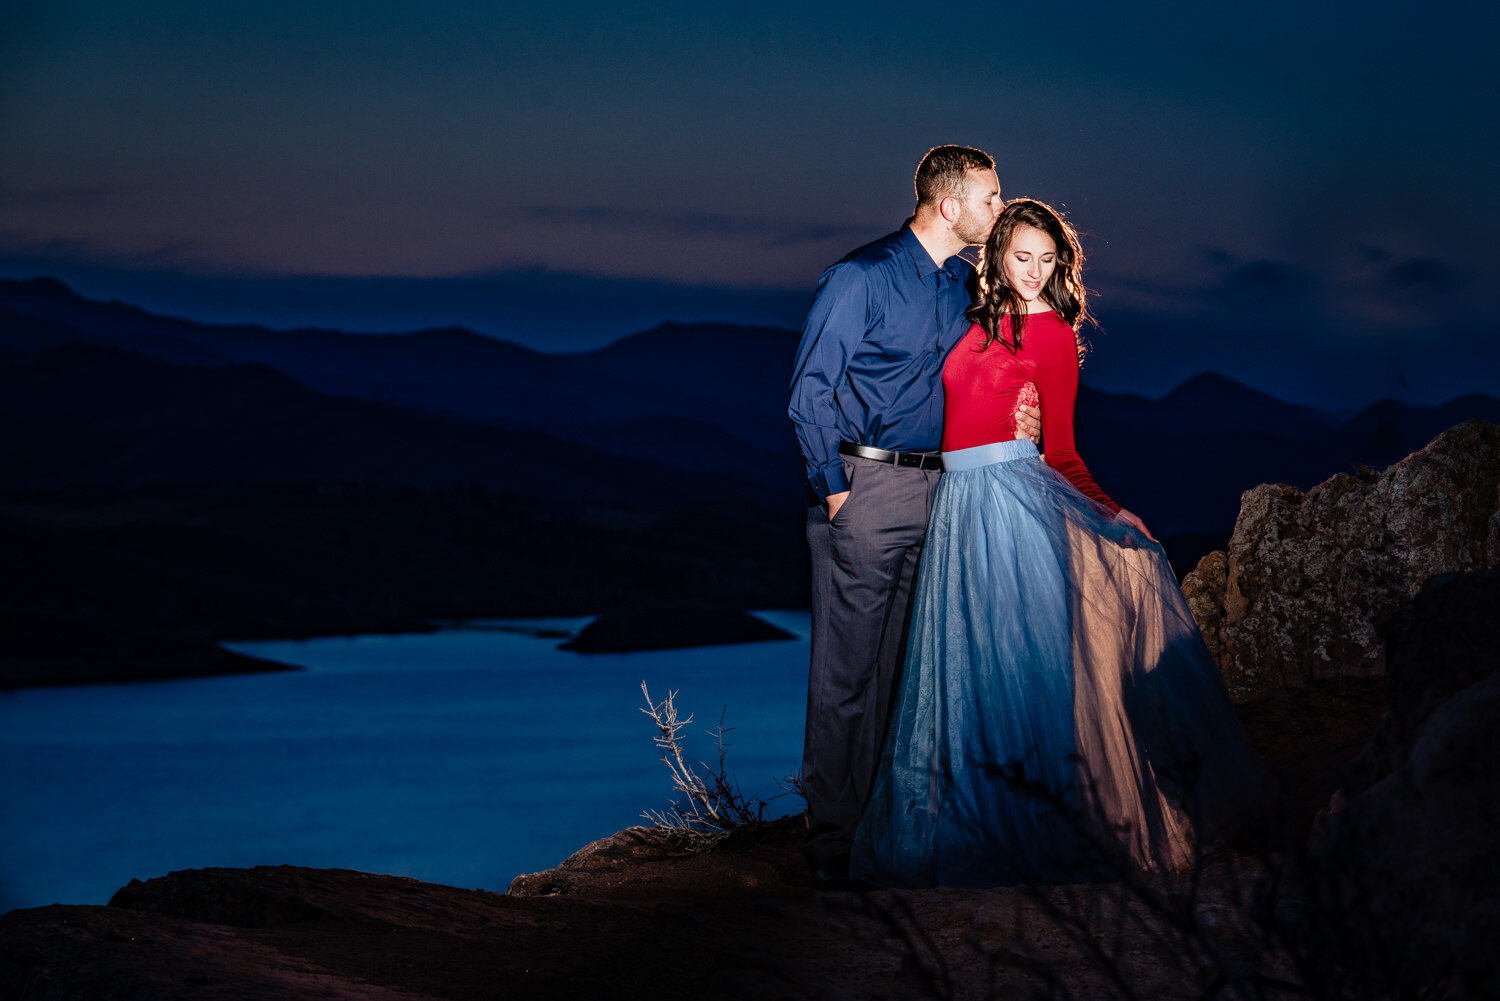  Horsetooth Reservoir Engagement Photos by Fort Collins Wedding Photographer JMGant Photography 